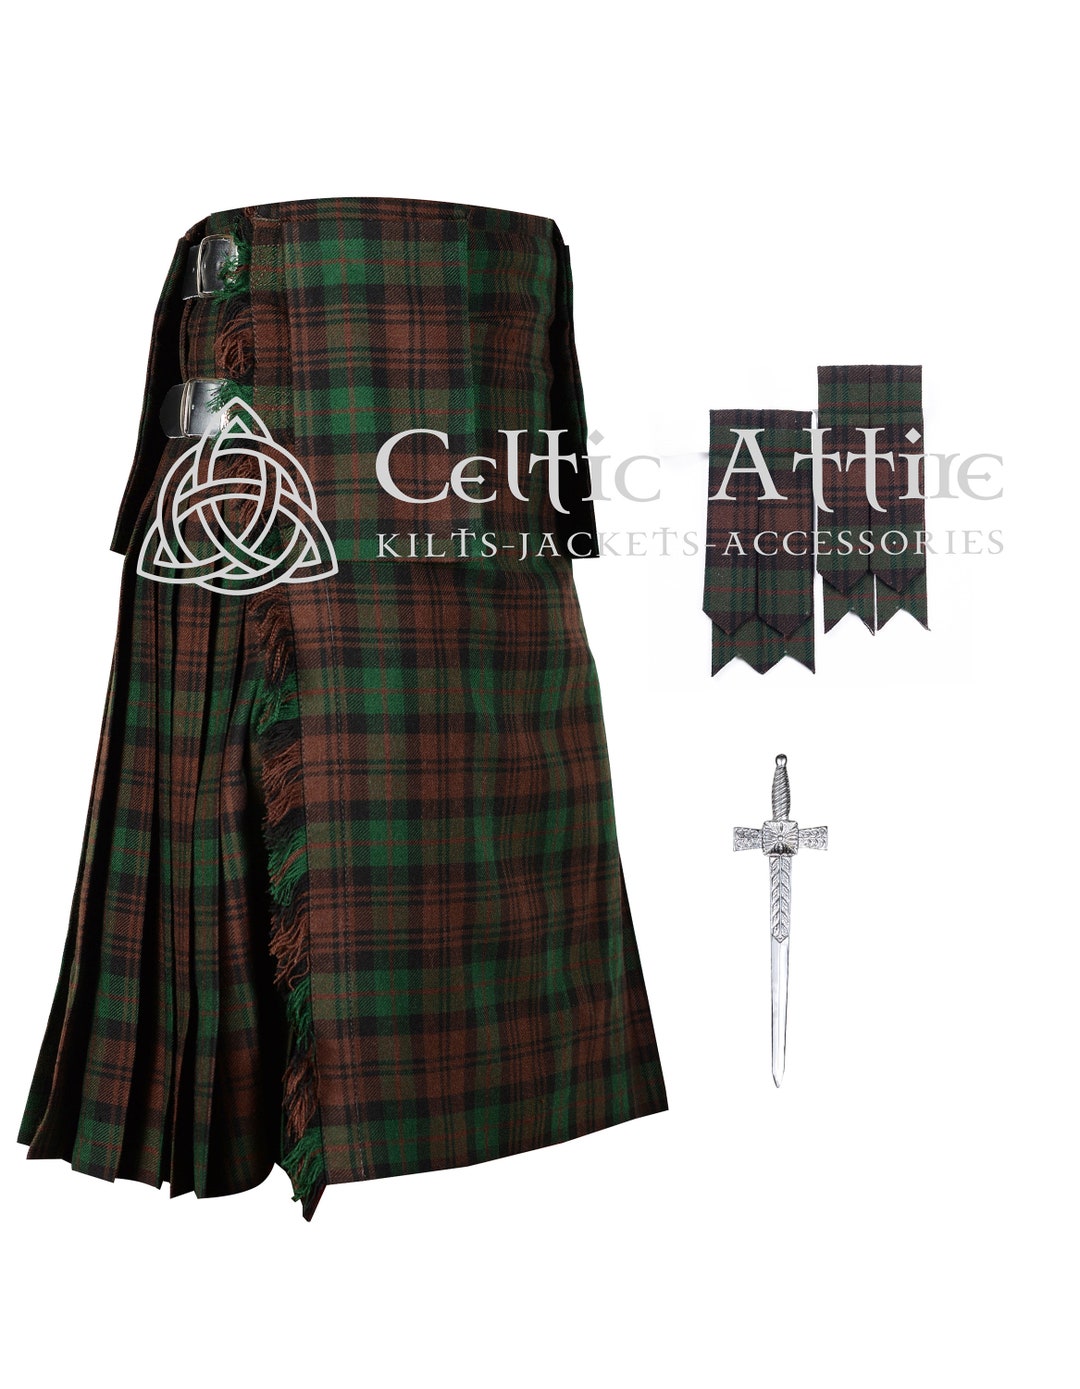 Scottish 8 Yard Tartan Kilt Highlander Kilt for Men Custom Size 16 Oz ...